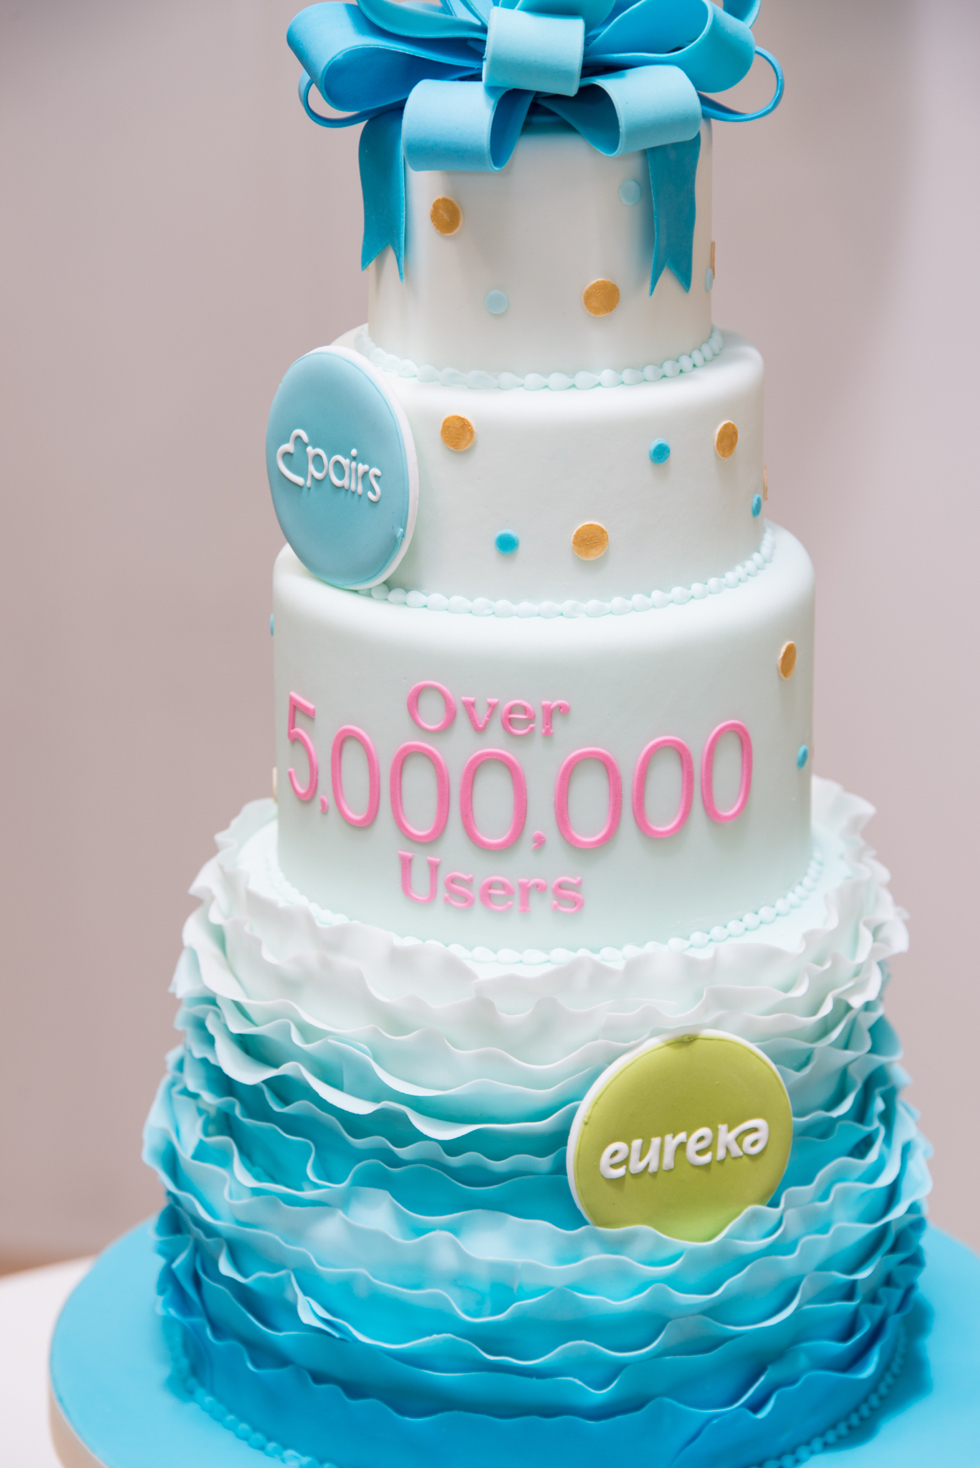 CAKEBY Pairs 5million Users Cake